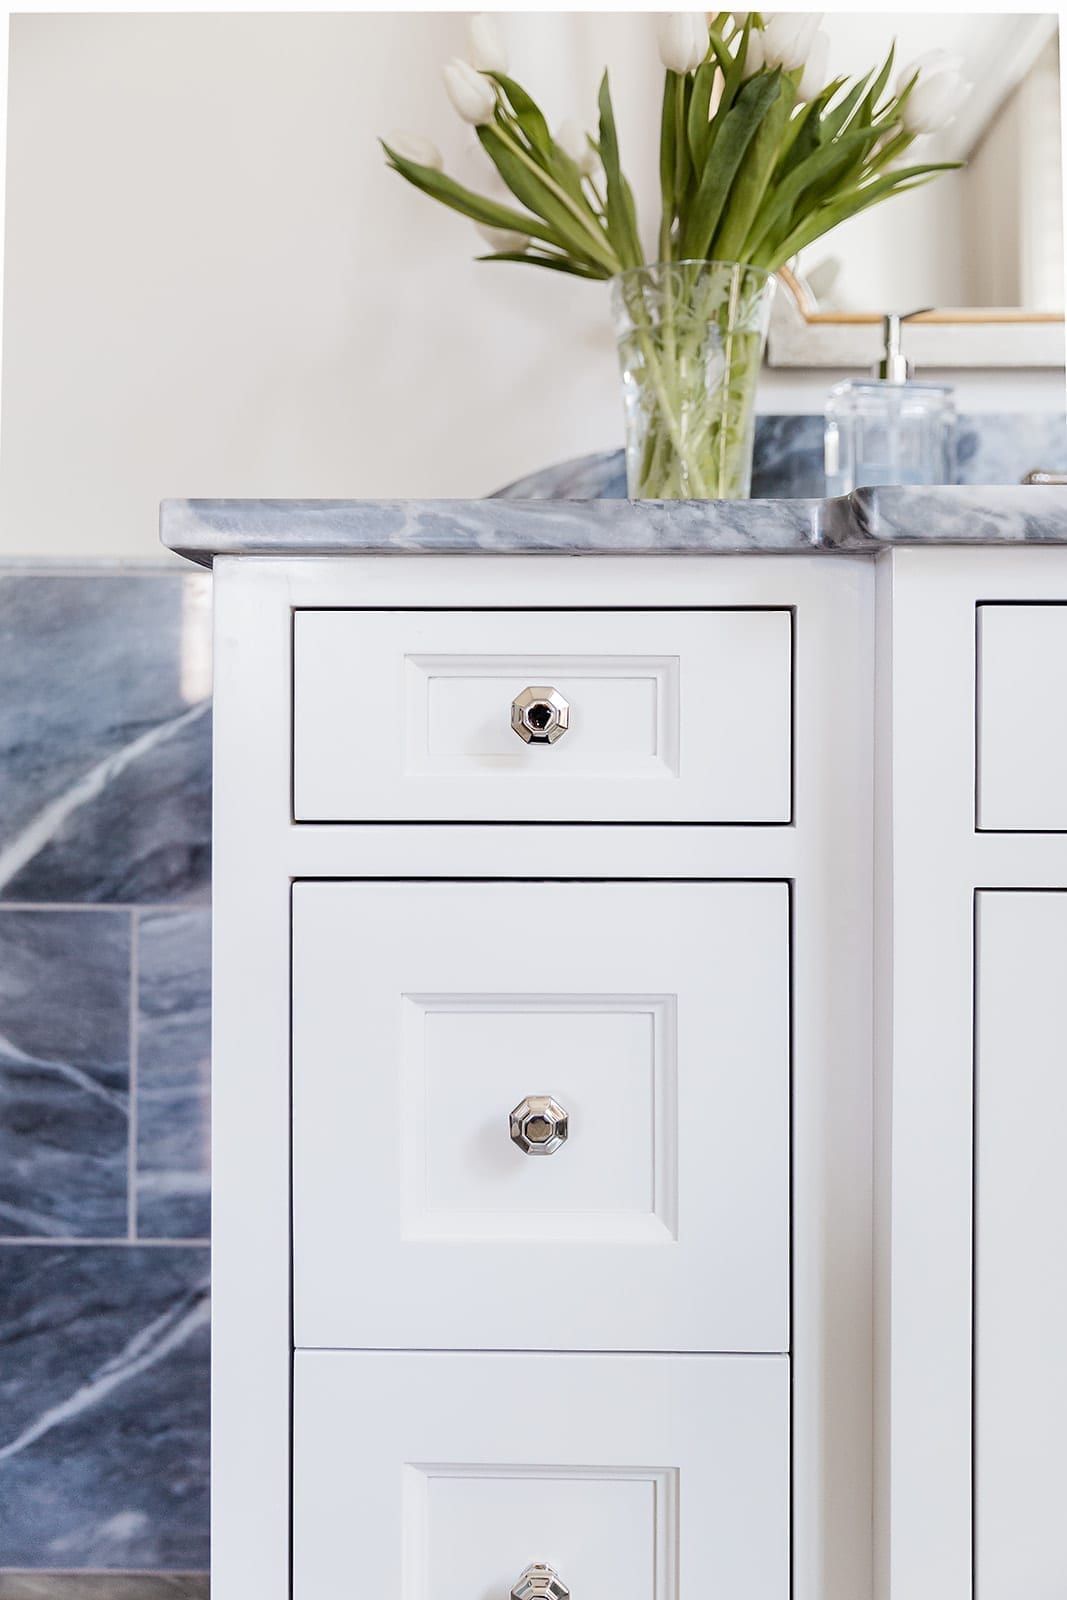 VESTA hardware. Polished nickel hardware on bathroom vanities. Bardiglio gray marble and white bathroom cabinets.